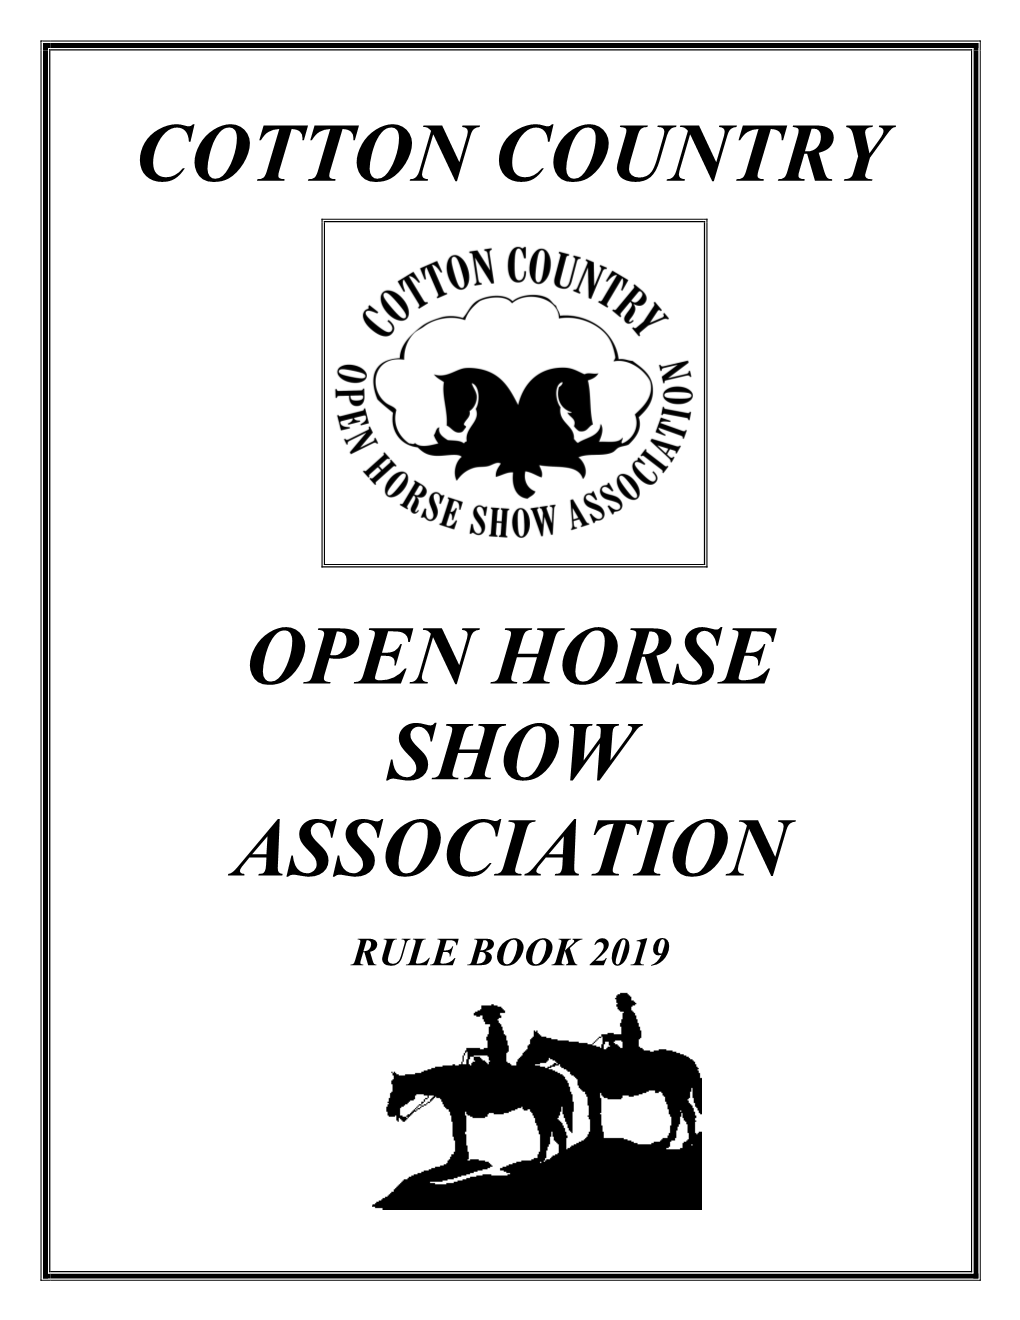 Cotton Country Open Horse Show Association